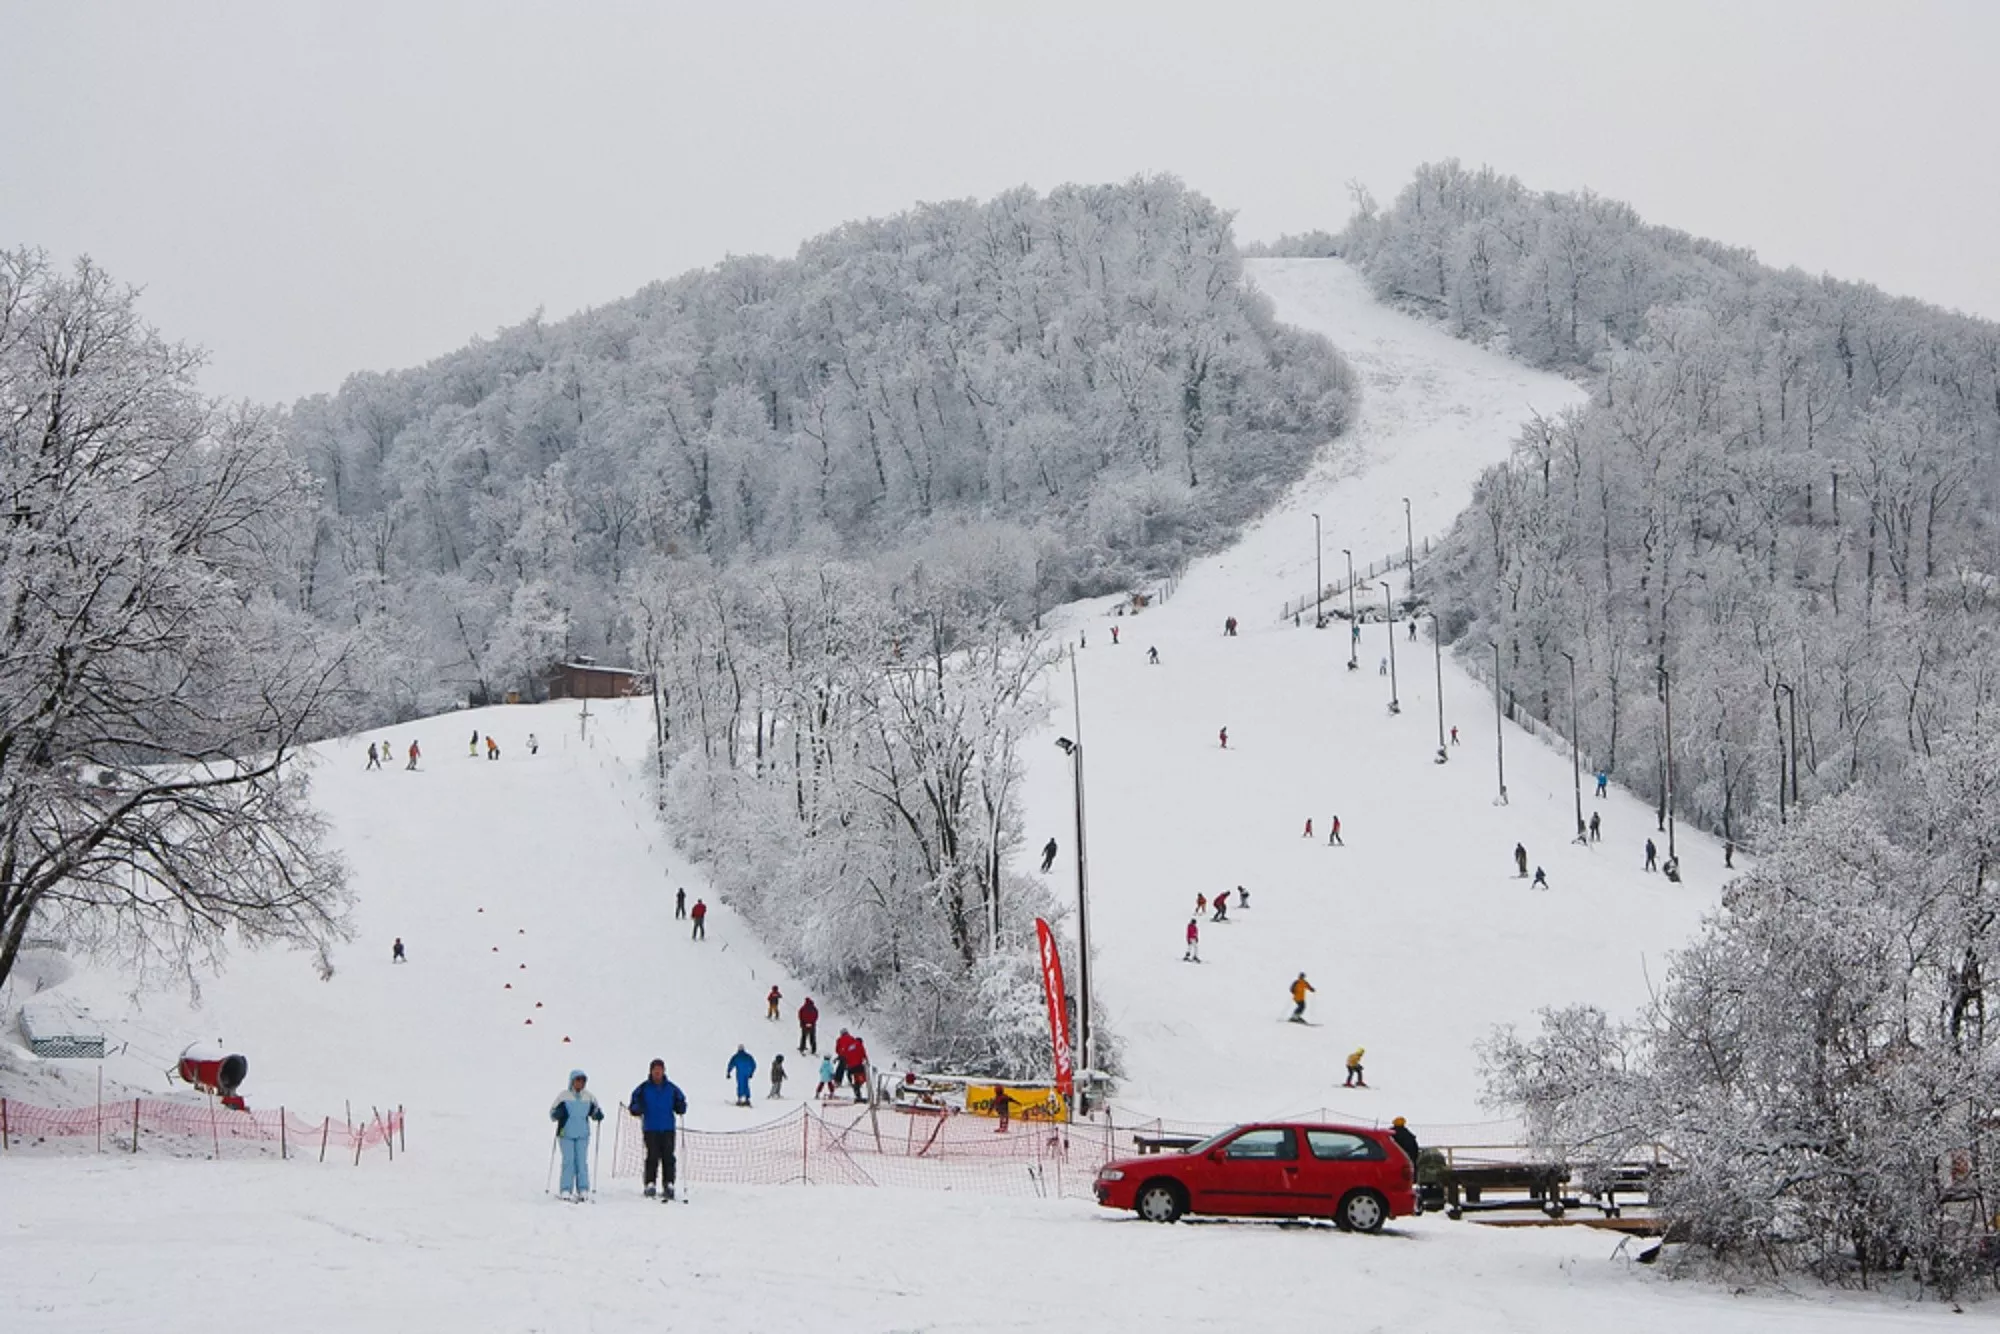 Nagyvillam Ski Resort in Hungary, Europe | Snowboarding,Skiing - Rated 3.8